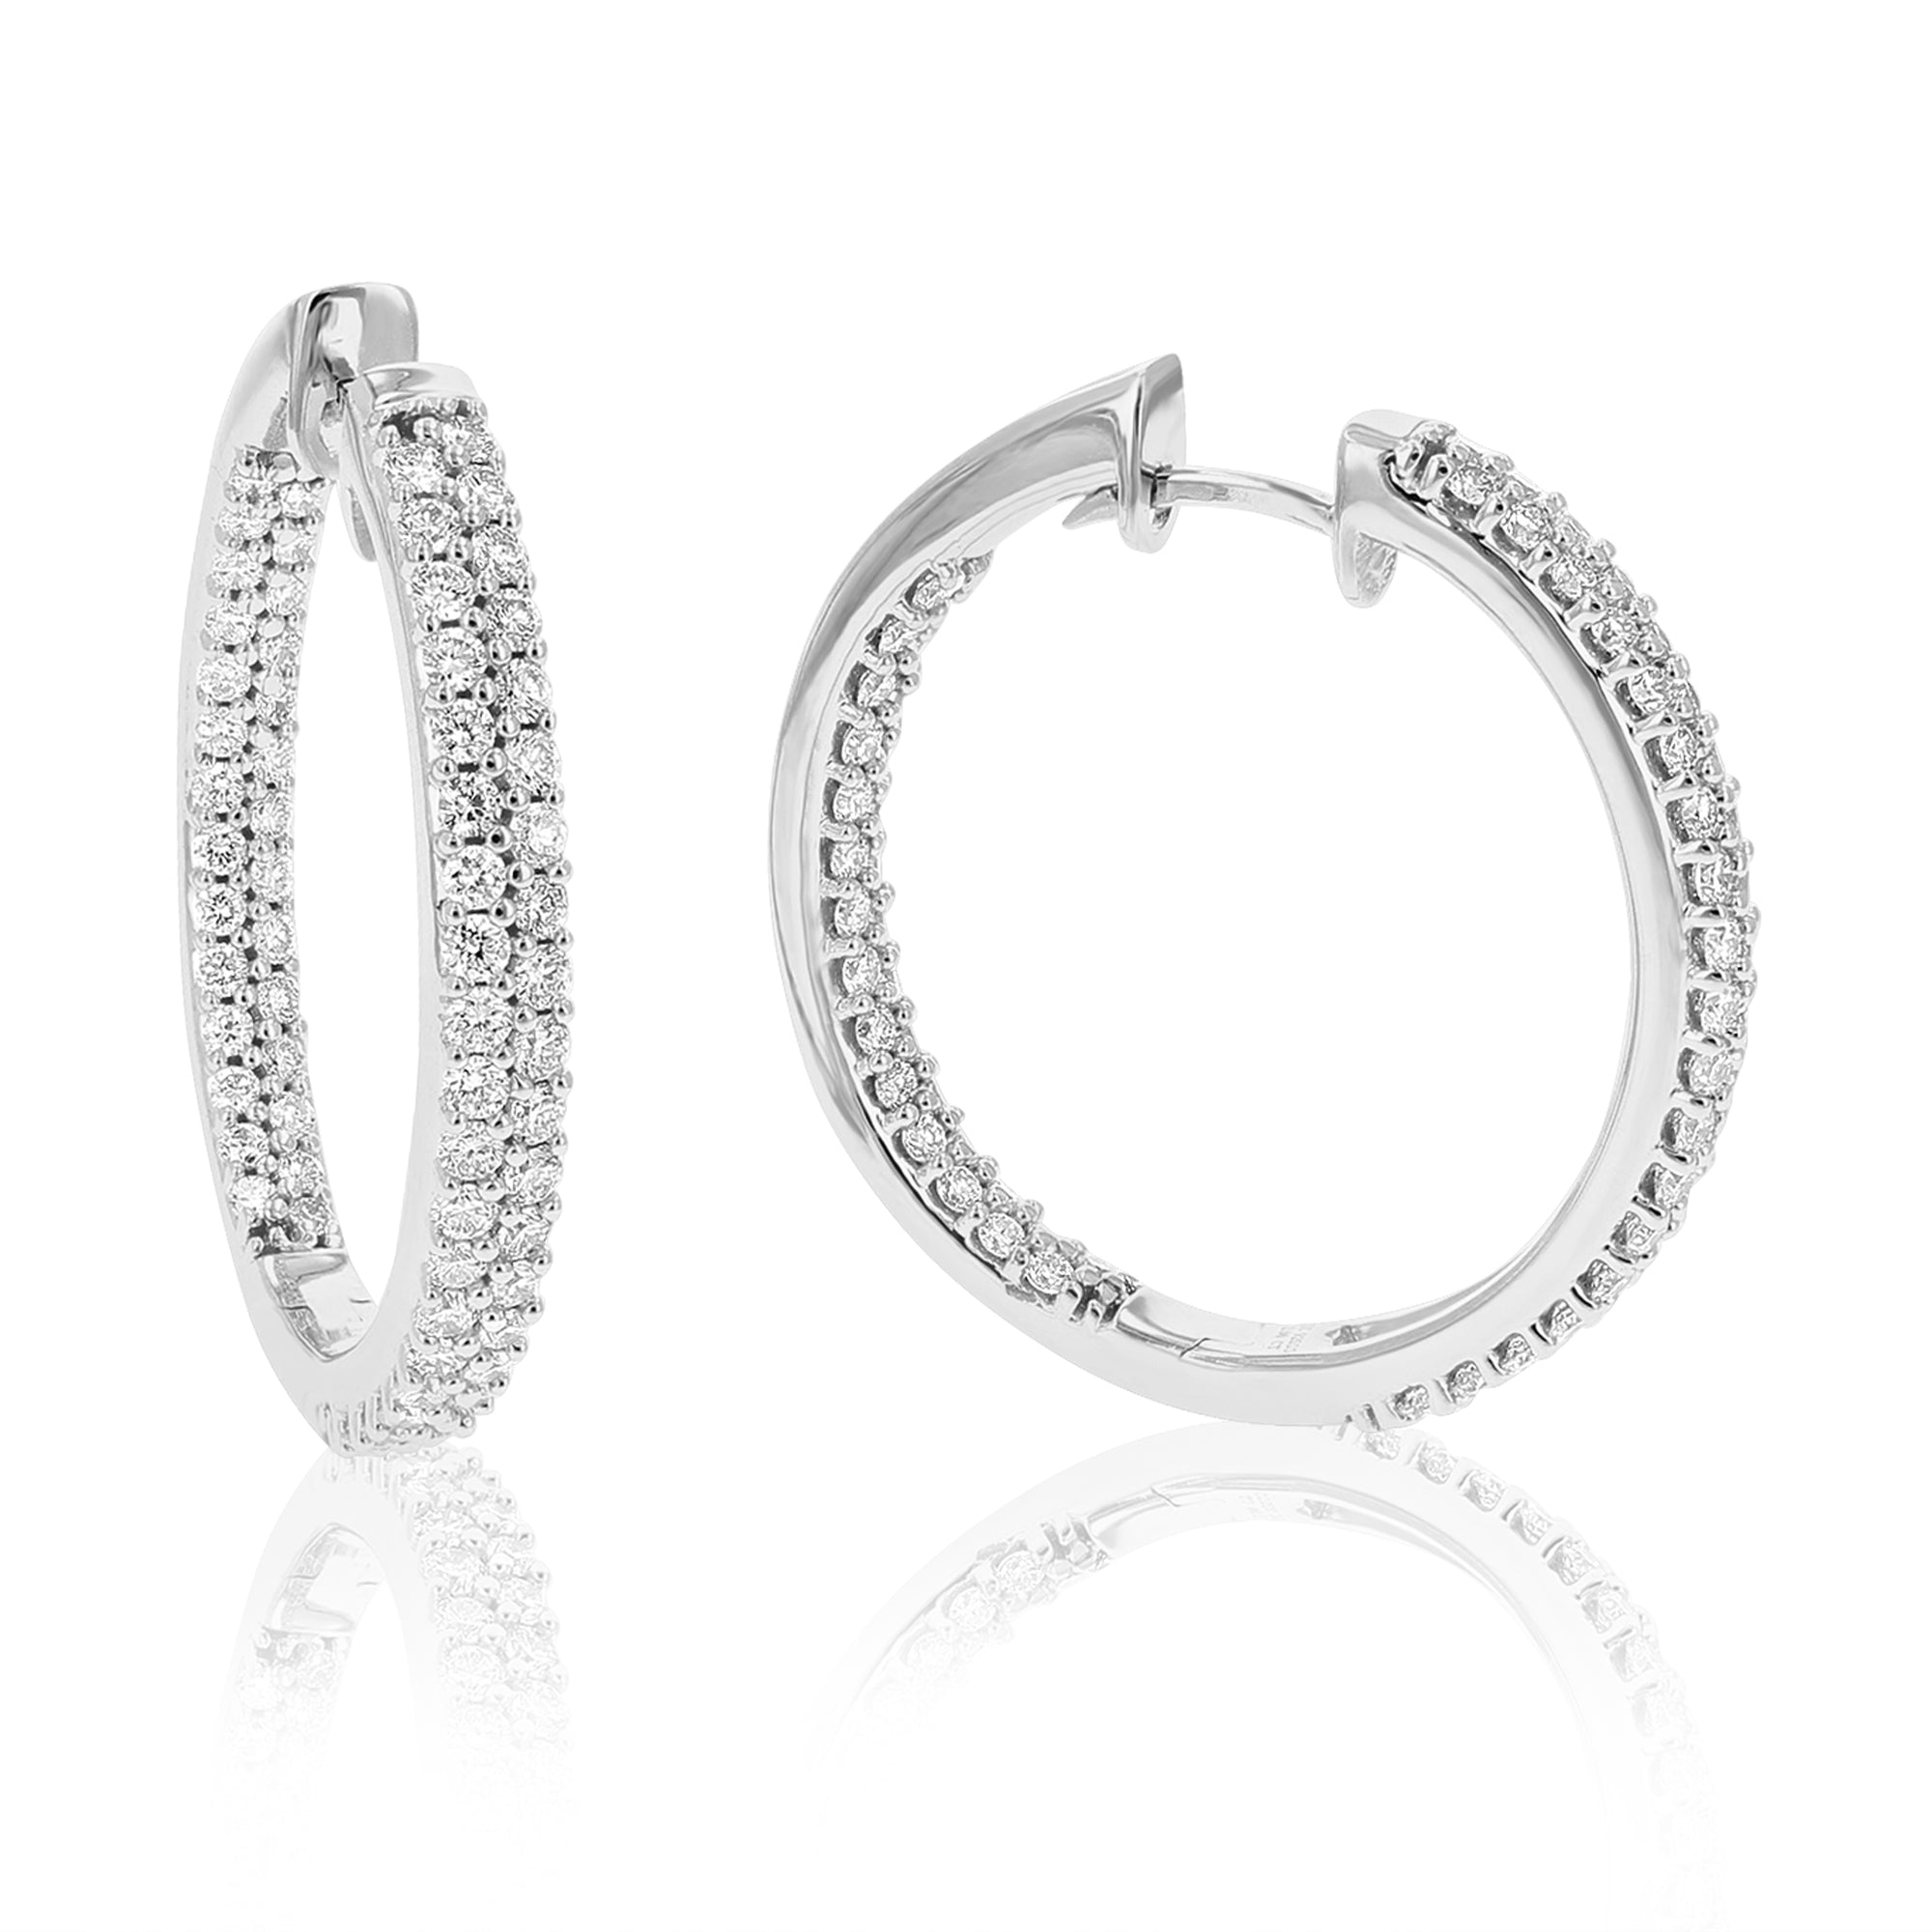 2 cttw Diamond Hoop Earrings for Women, Round Lab Grown Diamond Earrings in .925 Sterling Silver, Prong Setting, 1 Inch